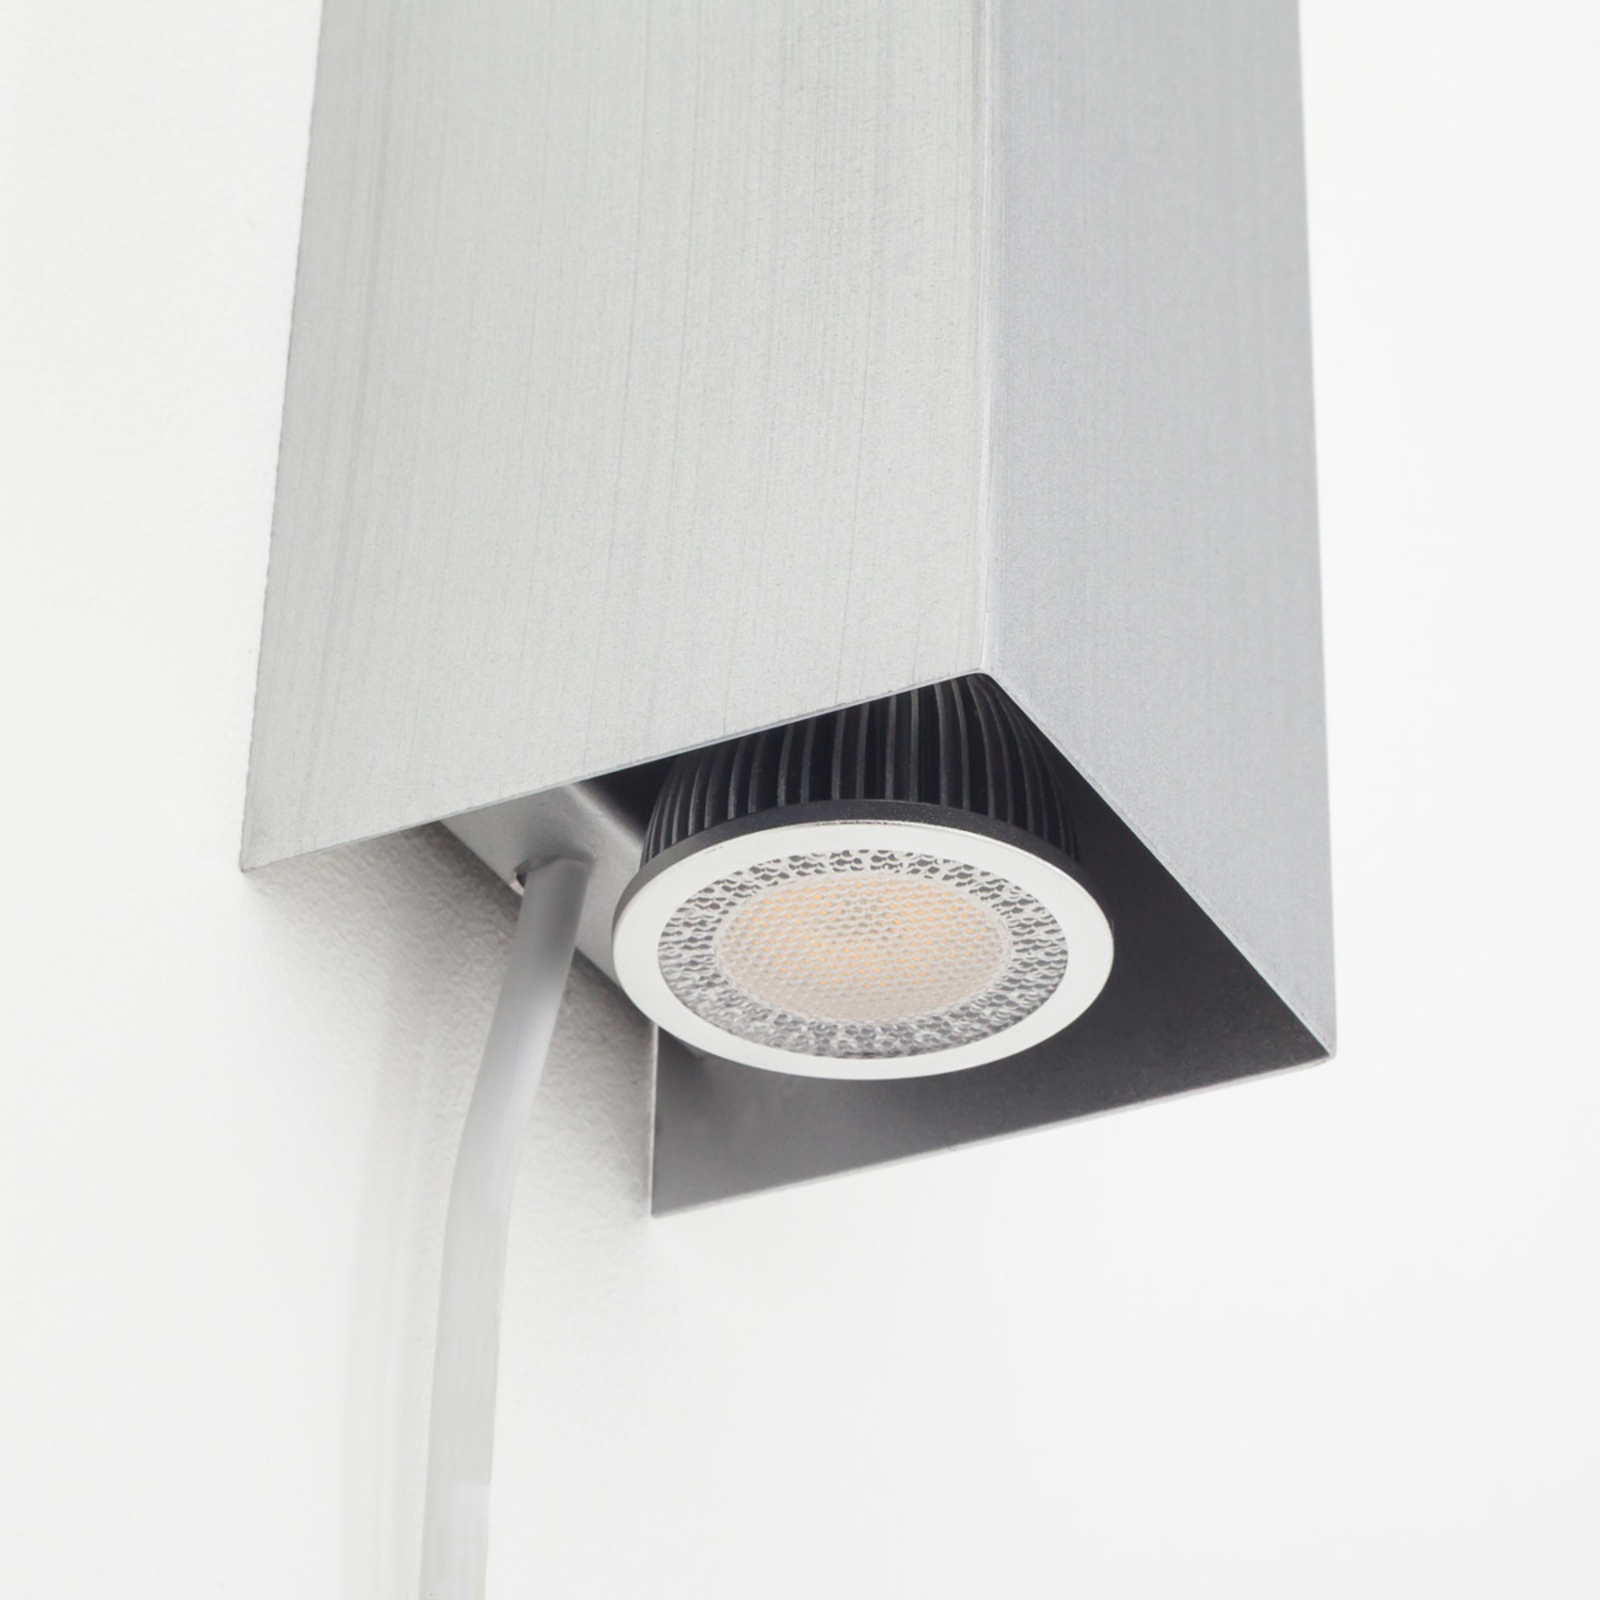 Kabir angular metal wall light, GU10